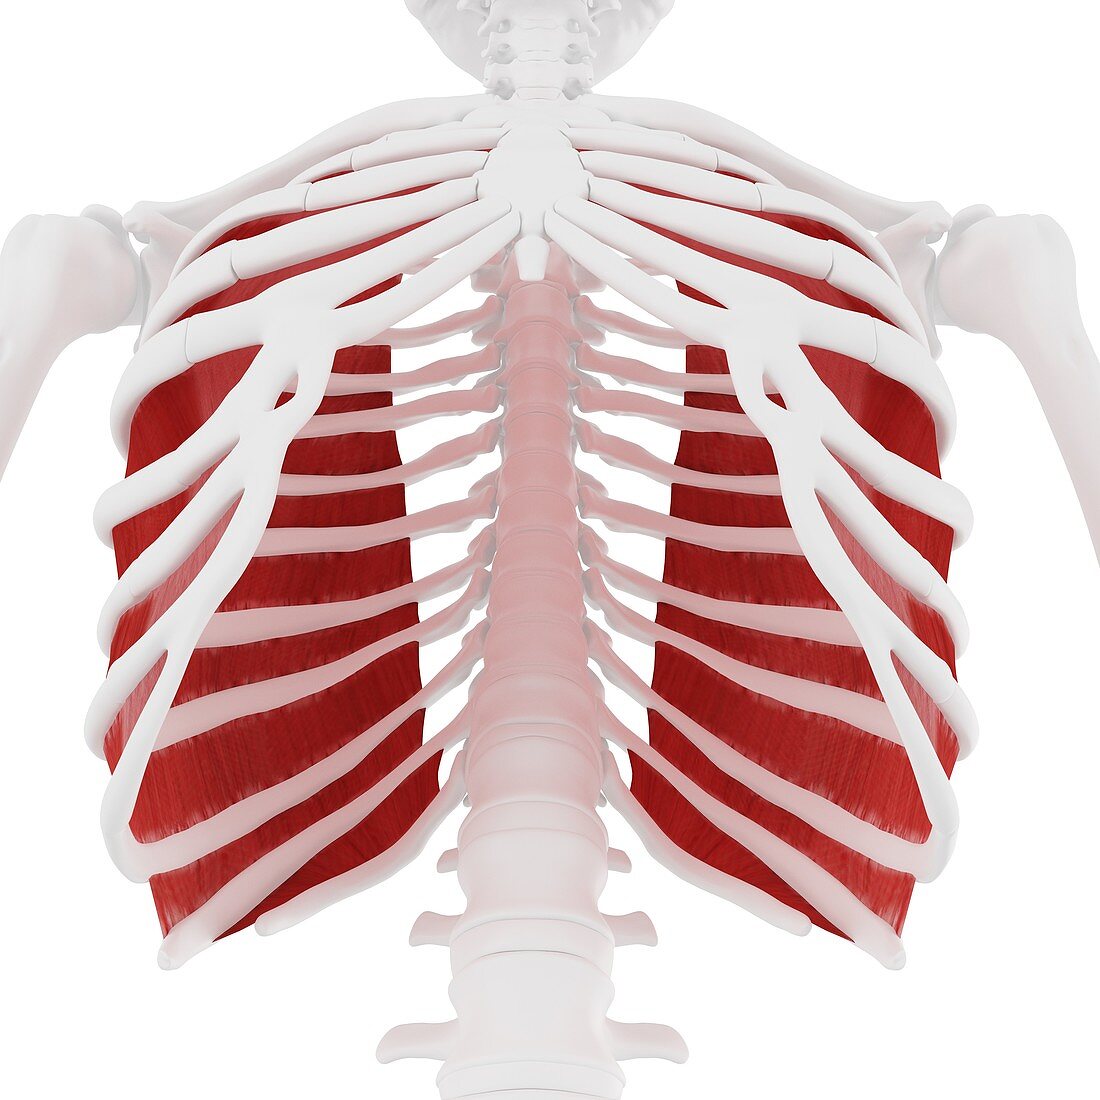 Innermost intercostal muscle, illustration